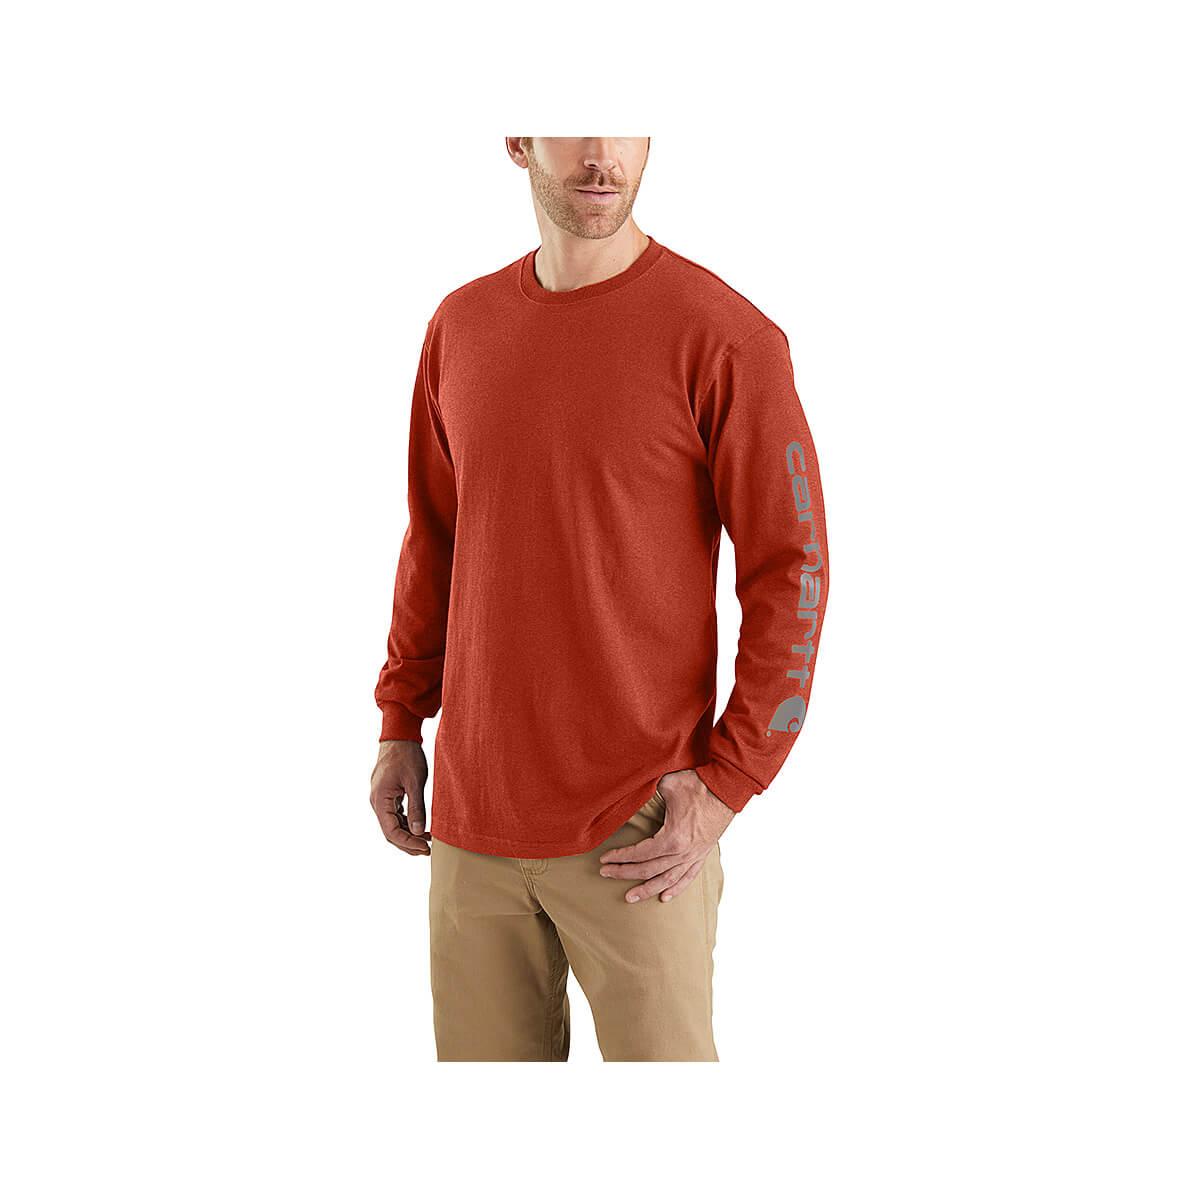  Men's Loose Fit Long Sleeve Logo T- Shirt